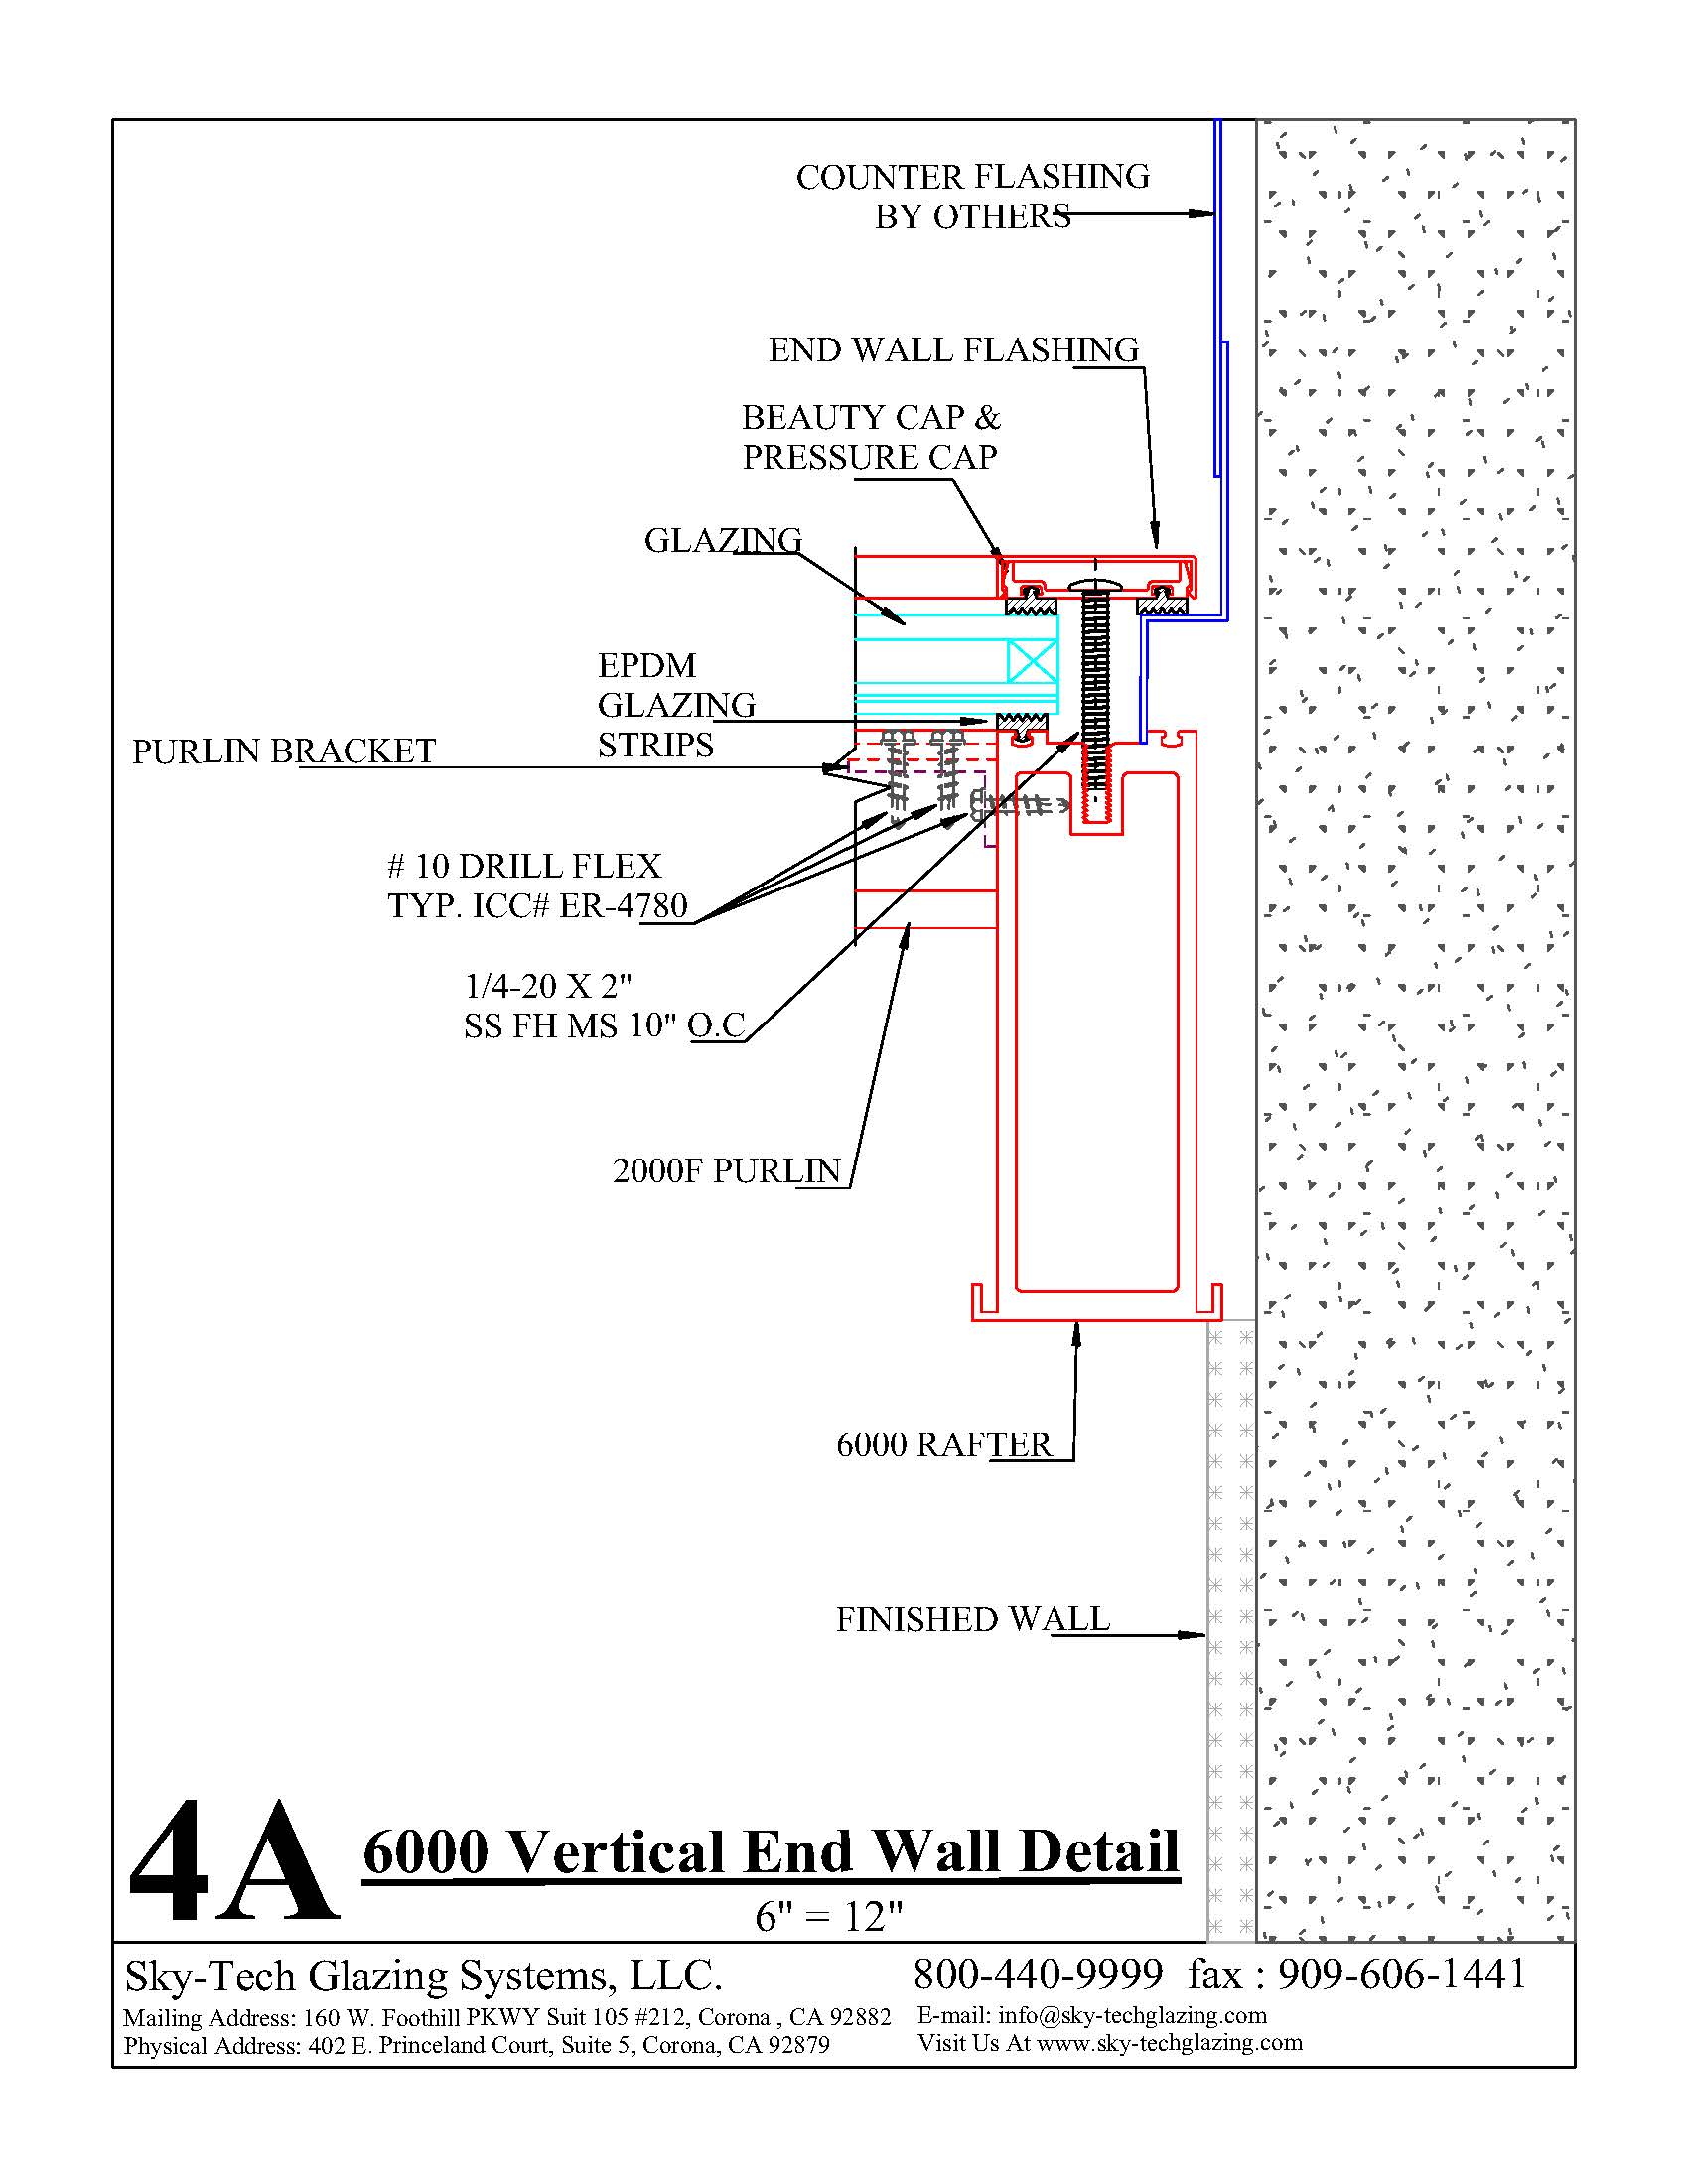 4A 6000 Vertical End Wall Detail